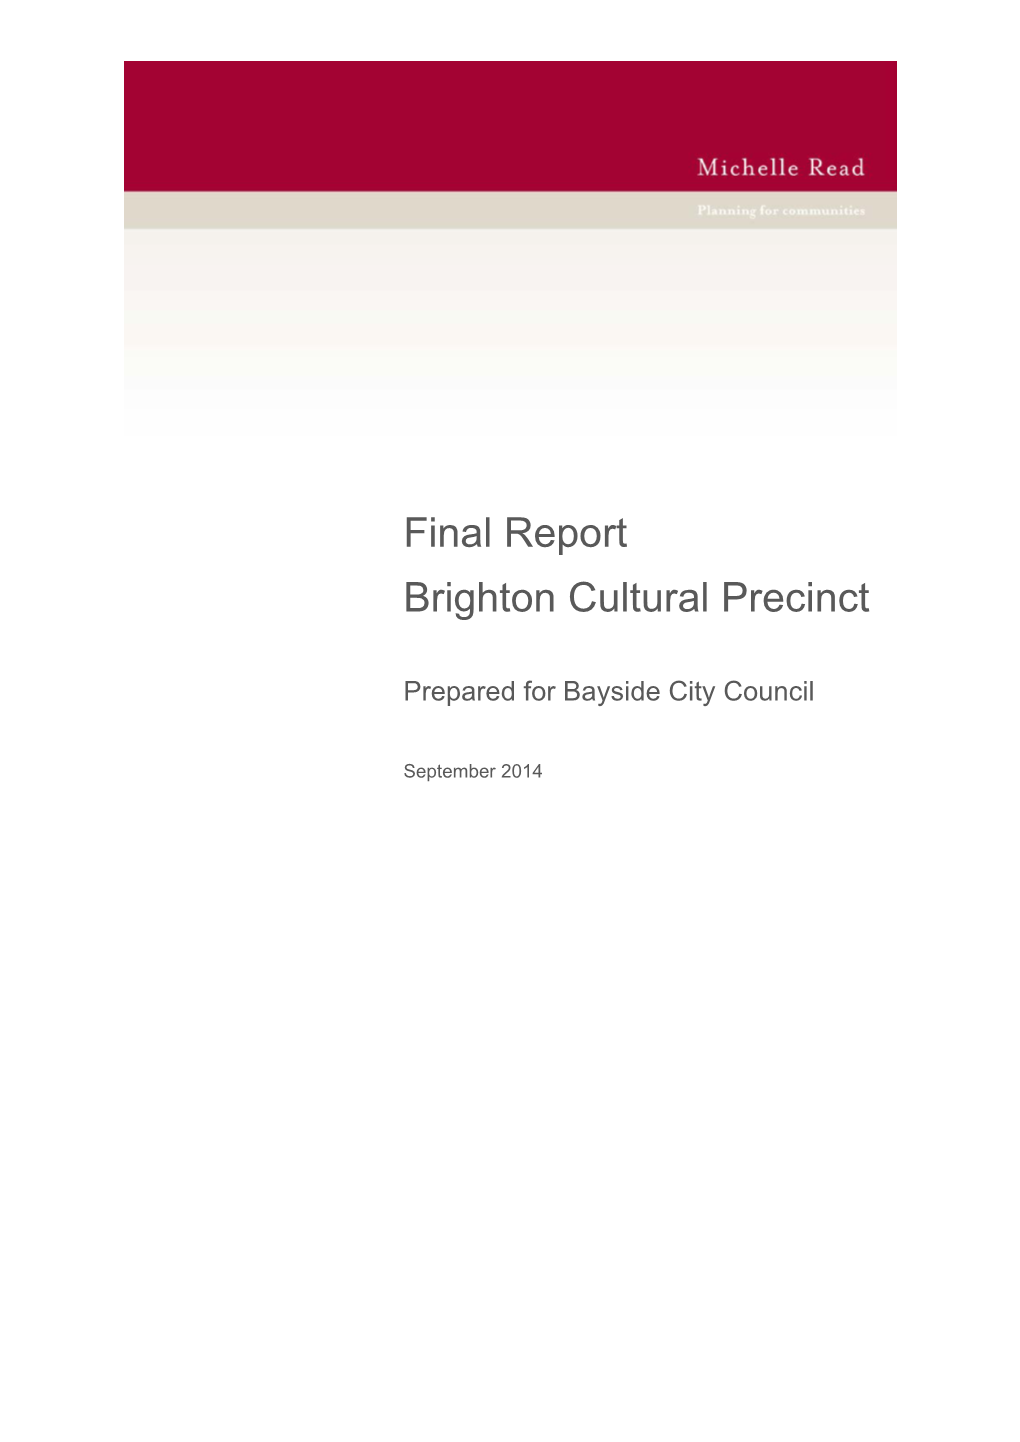 Final Report Brighton Cultural Precinct